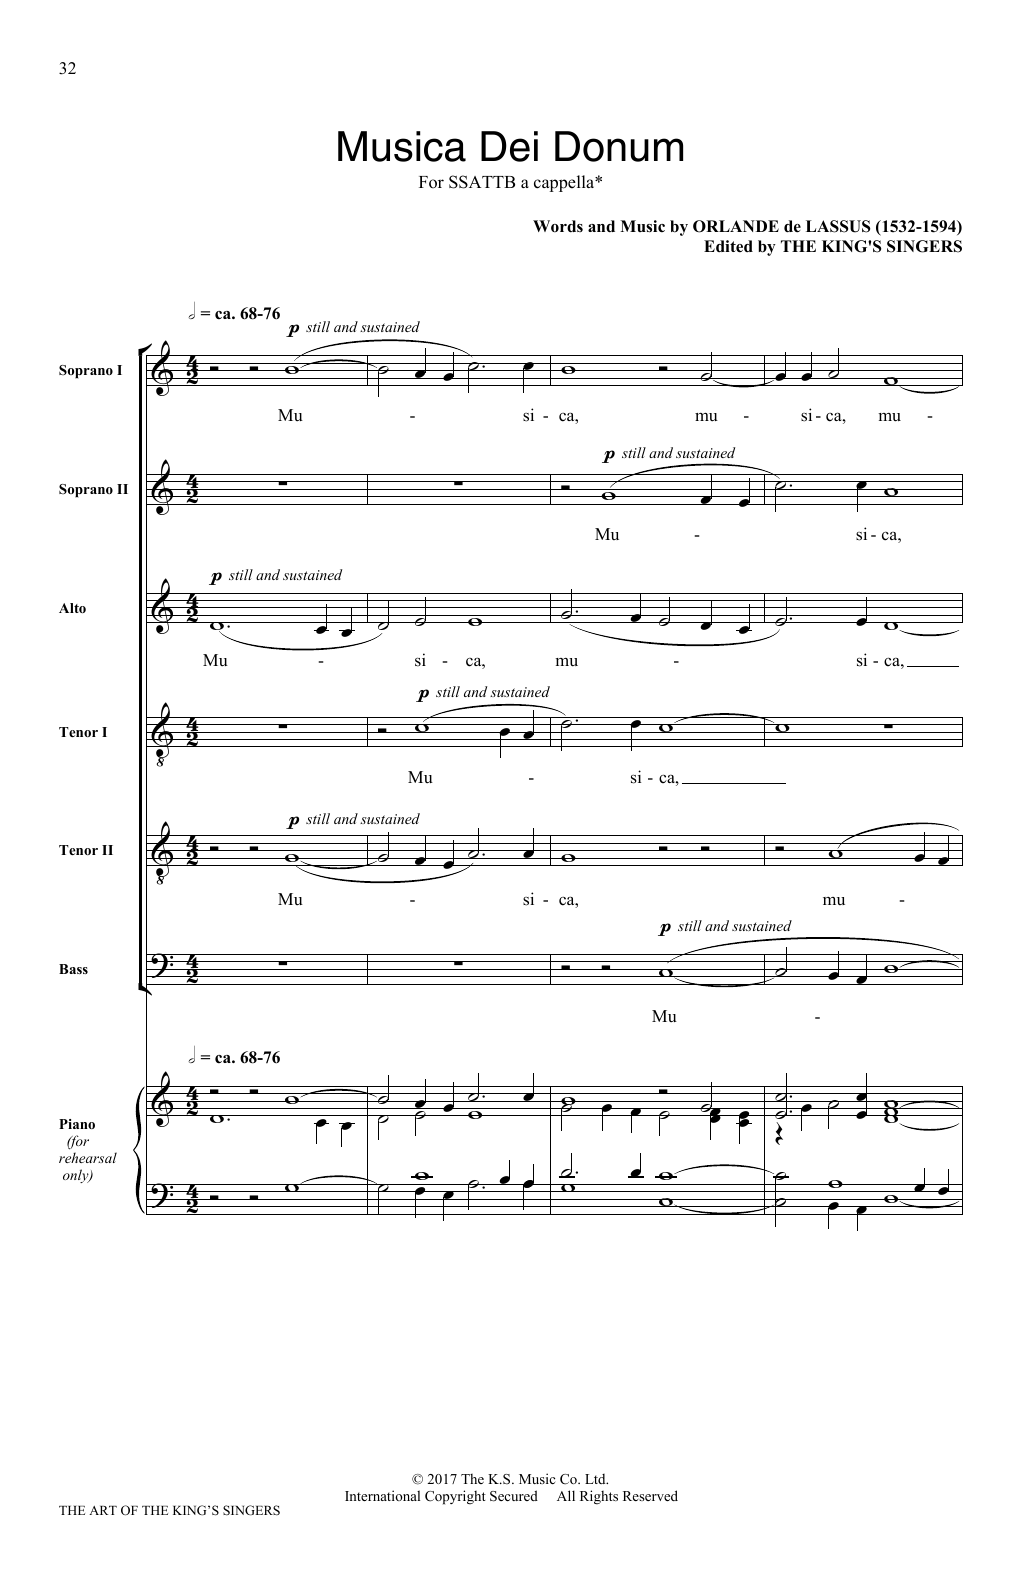 The King's Singers Musica Dei Donum sheet music notes and chords arranged for SATB Choir